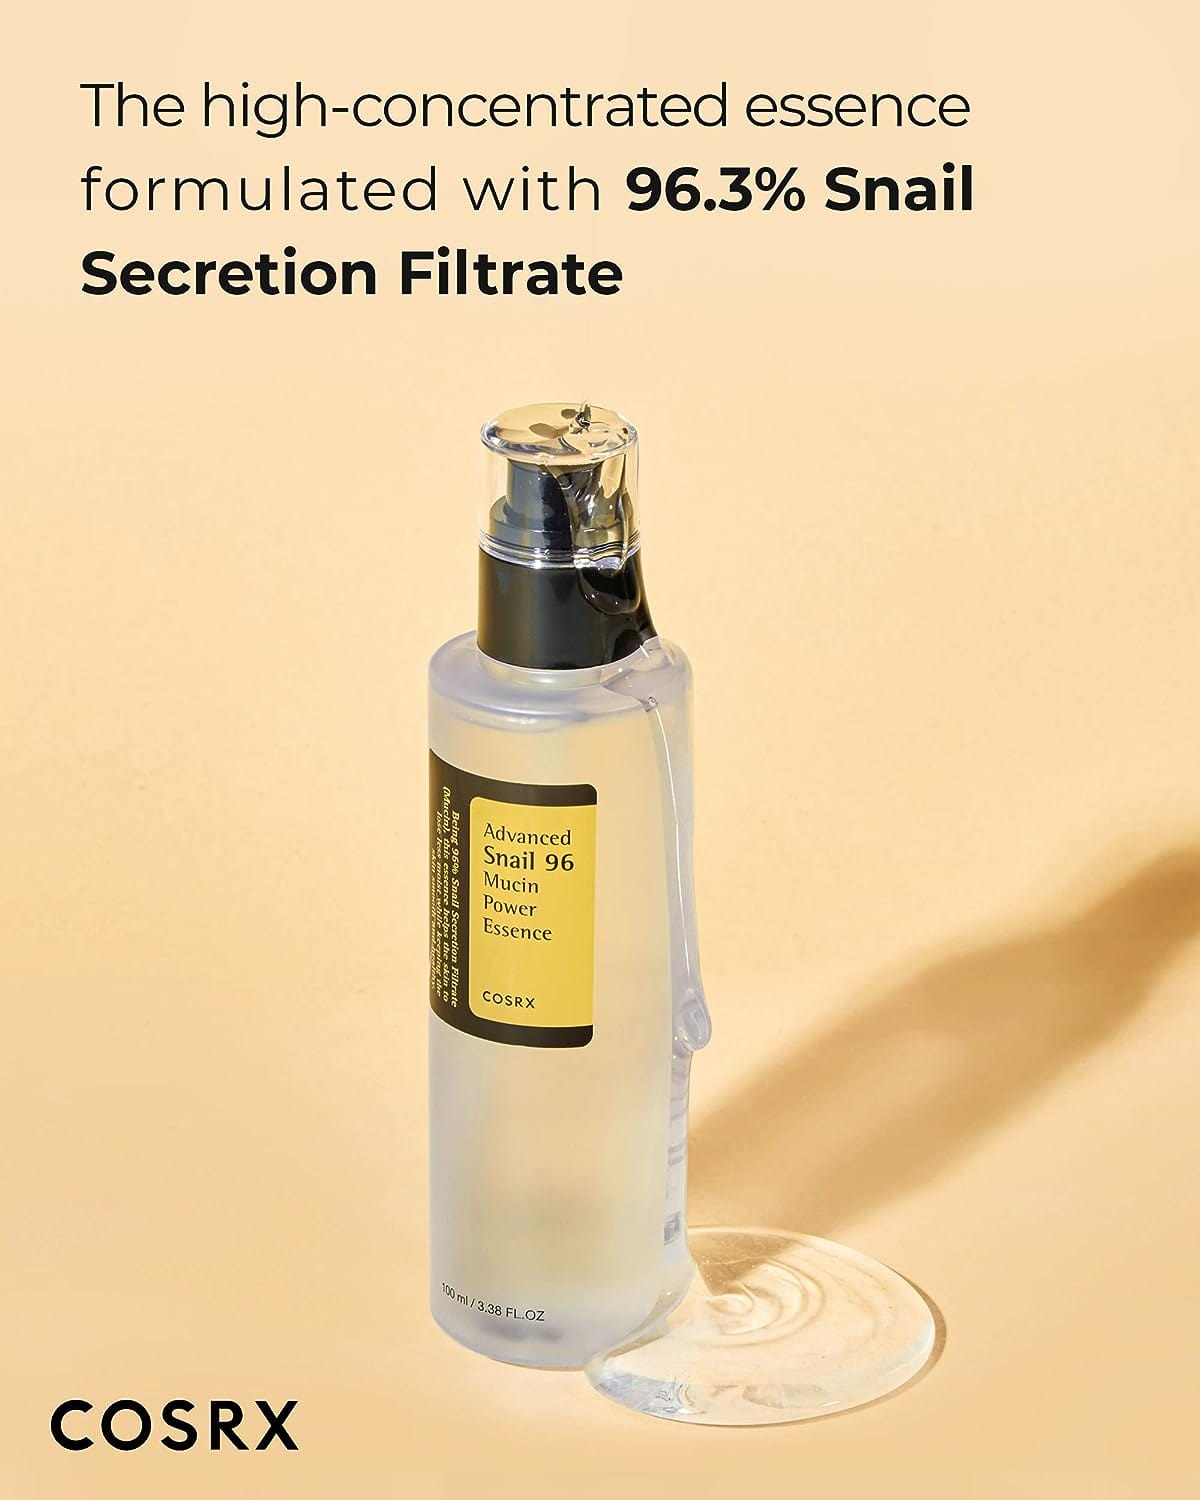 COSRX Advanced Snail 96 Mucin Power Essence 100ml | Snail Secretion Filtrate 96% | Skin Repair Serum | CPNP Registered | Korean Skin Care, Cruelty Free, Paraben Free